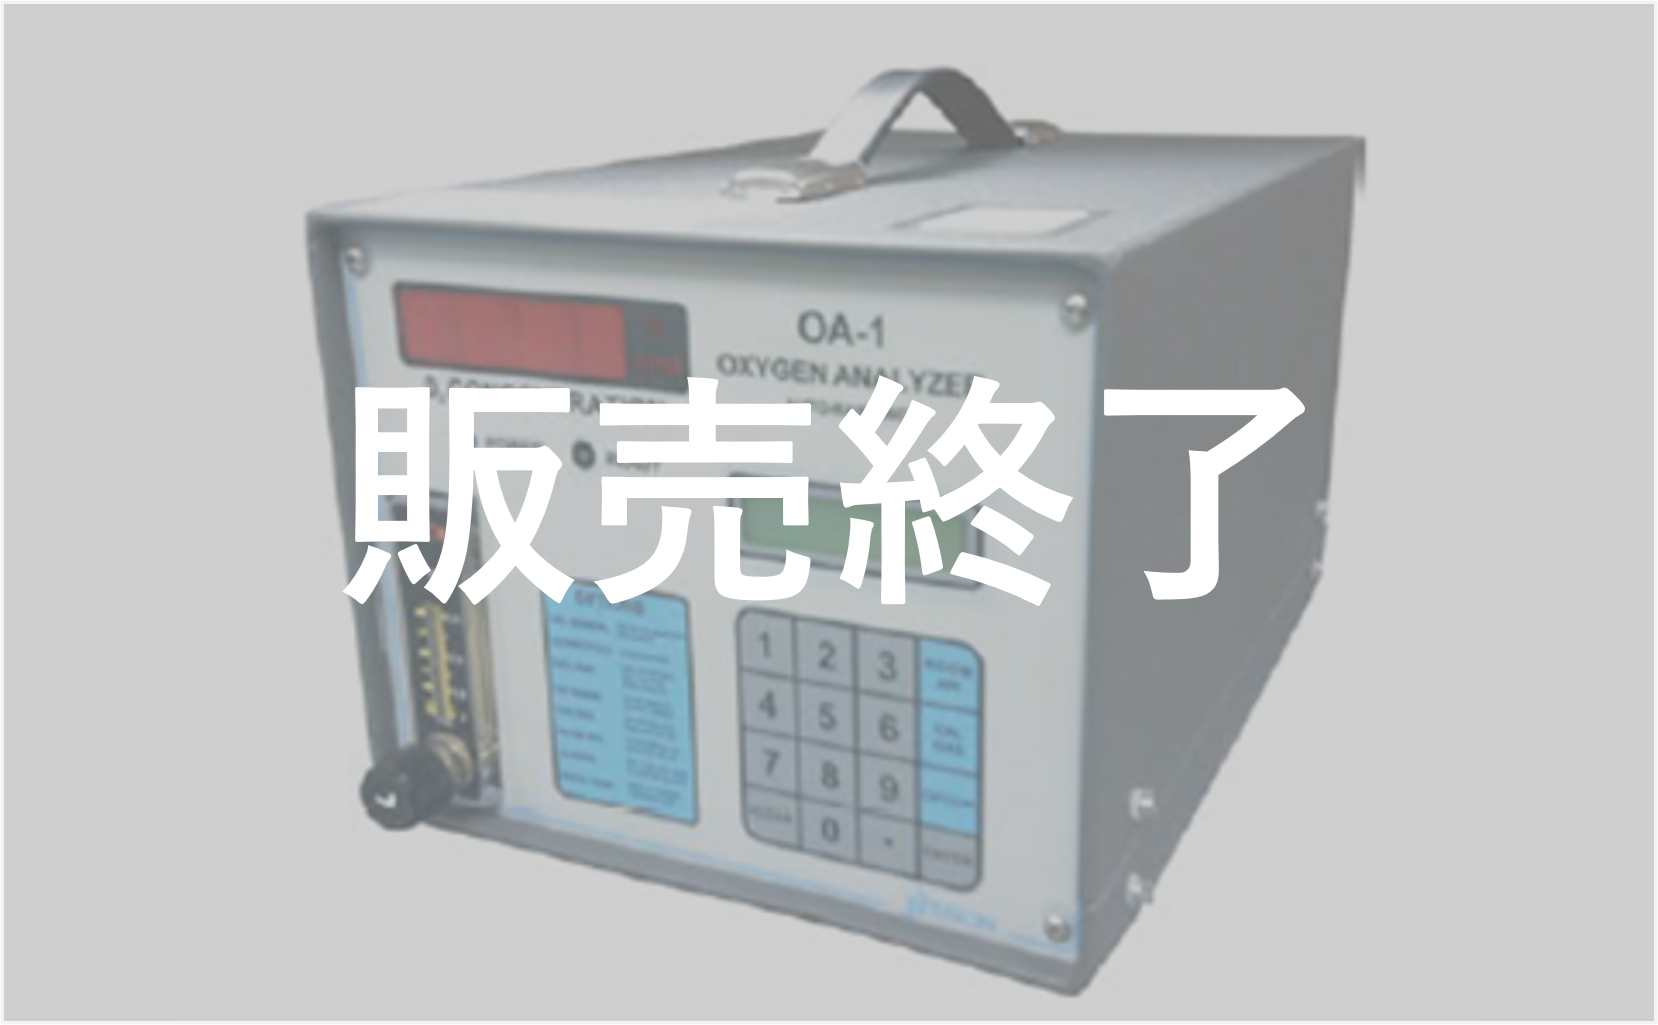 ppmセンサー一体型酸素濃度計 Model OA-1